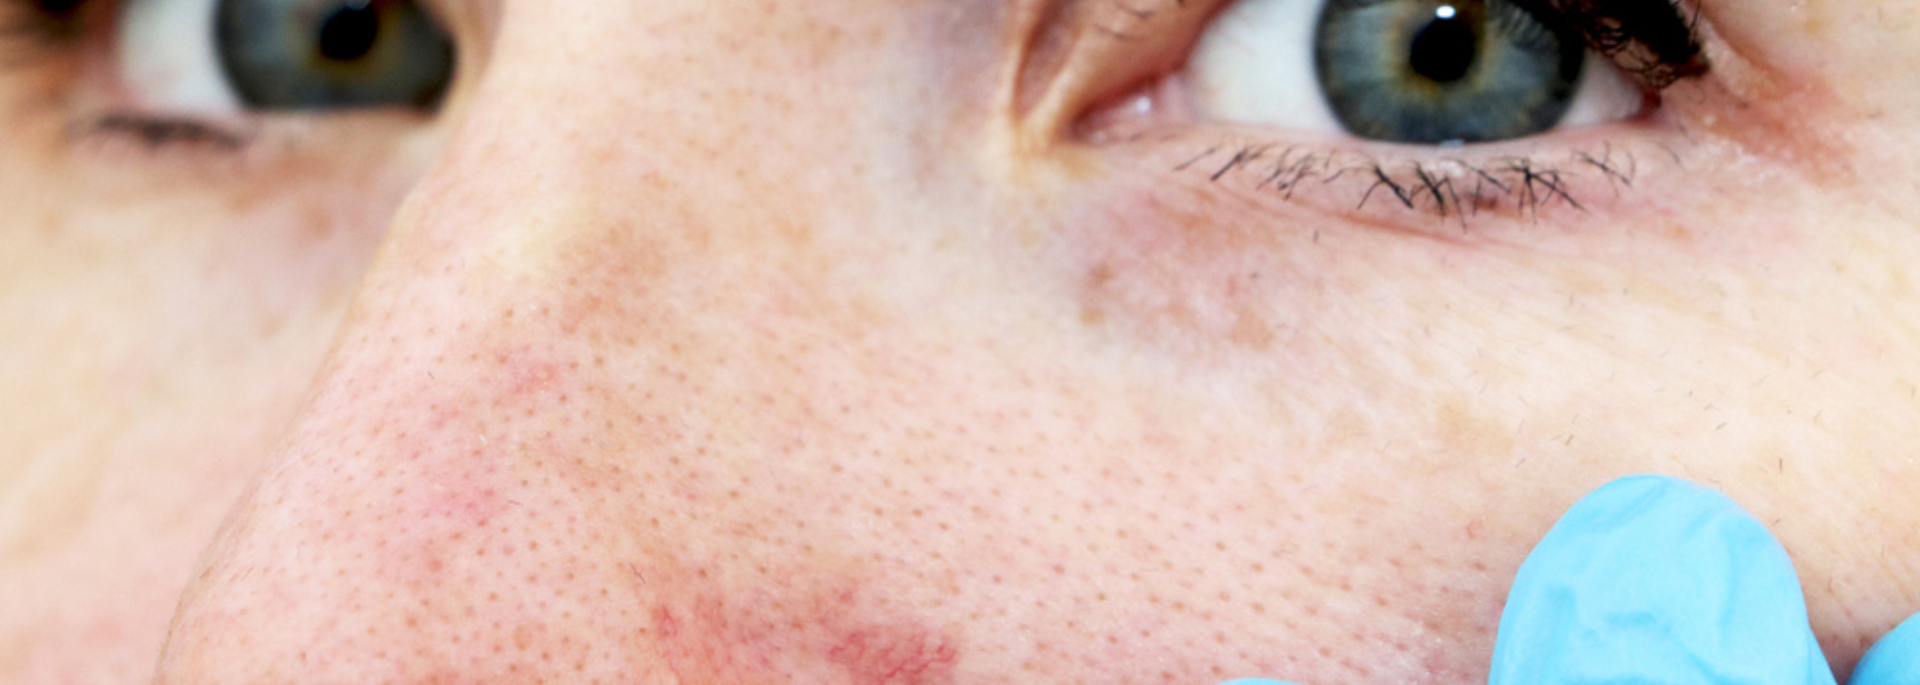 Close up shot of a women with spider veins around her nose - spider vein therapy - thread vein removal